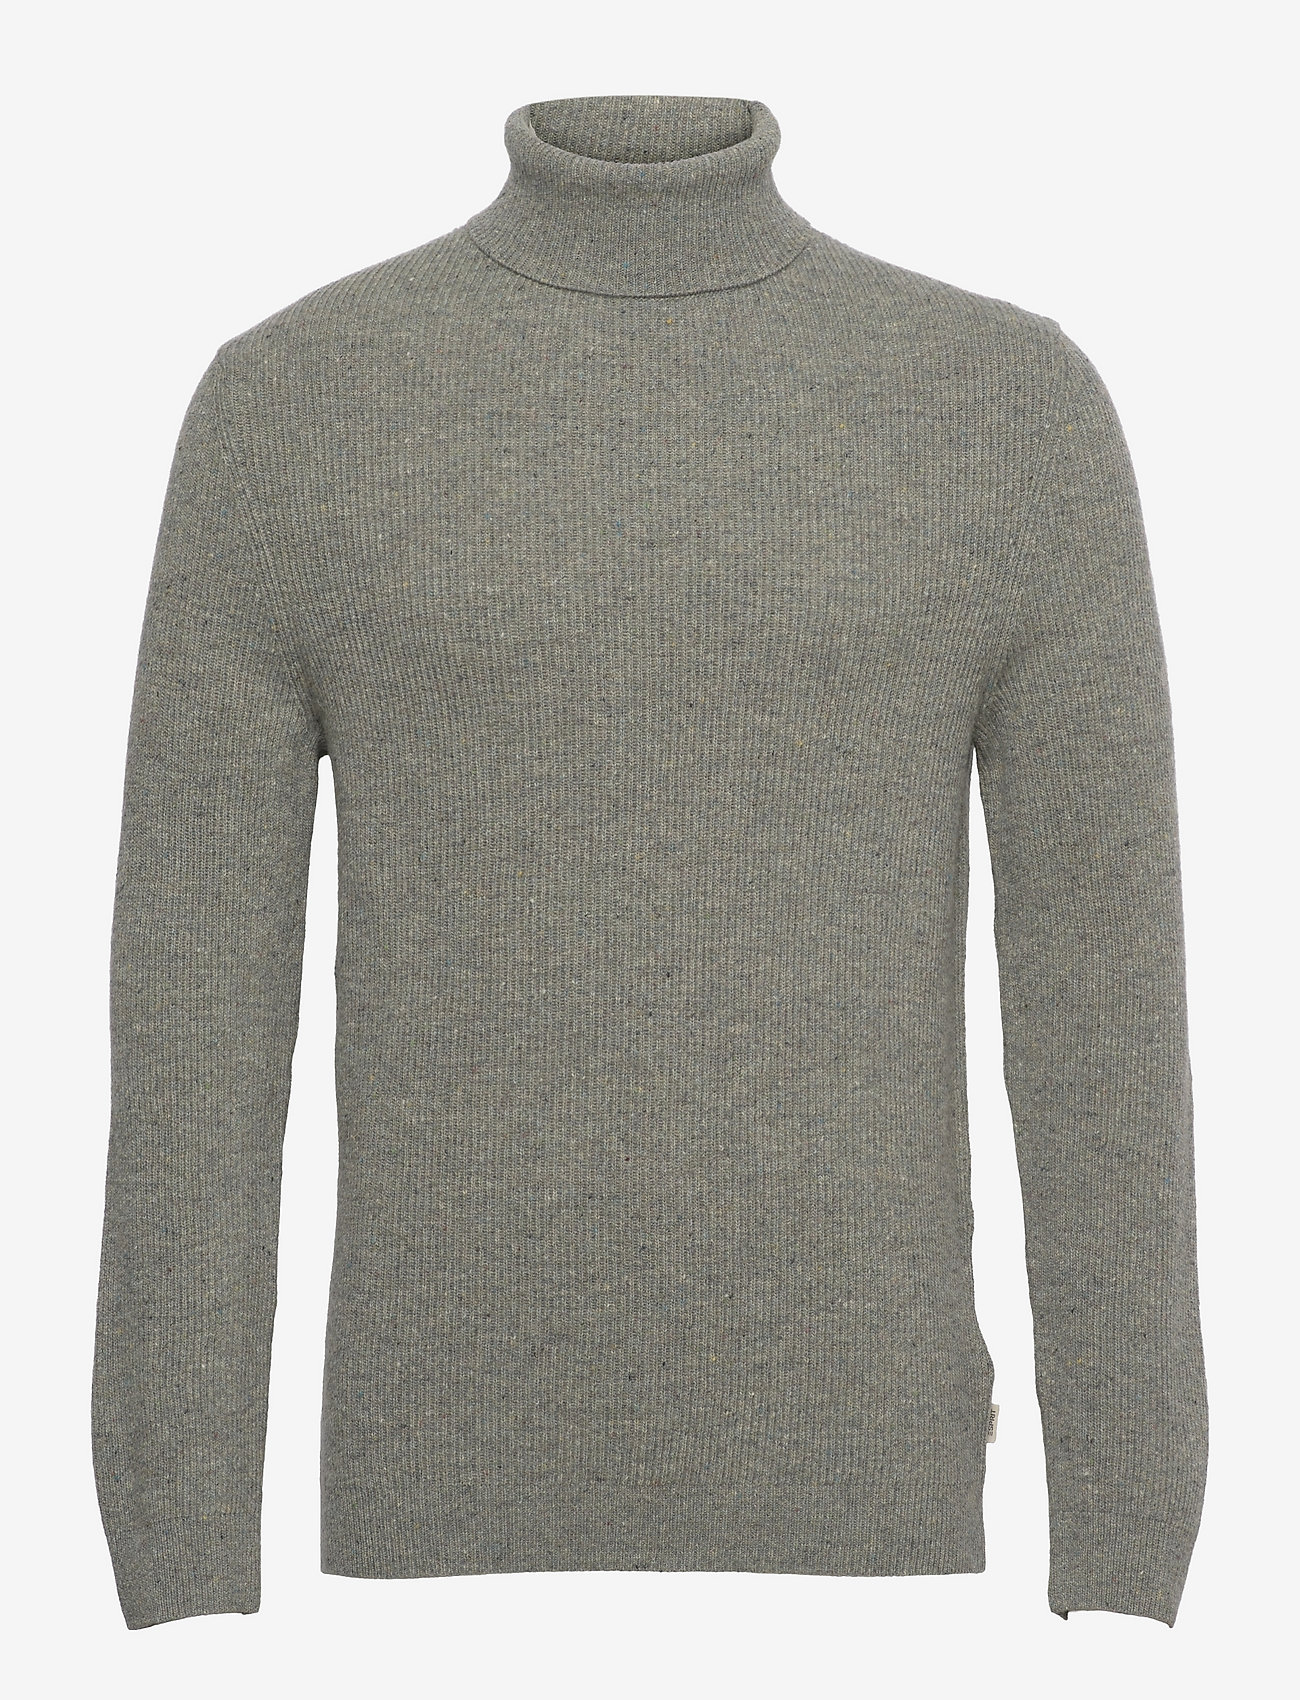 Esprit Casual - Sweaters - rullekraver - medium grey 5 - 0